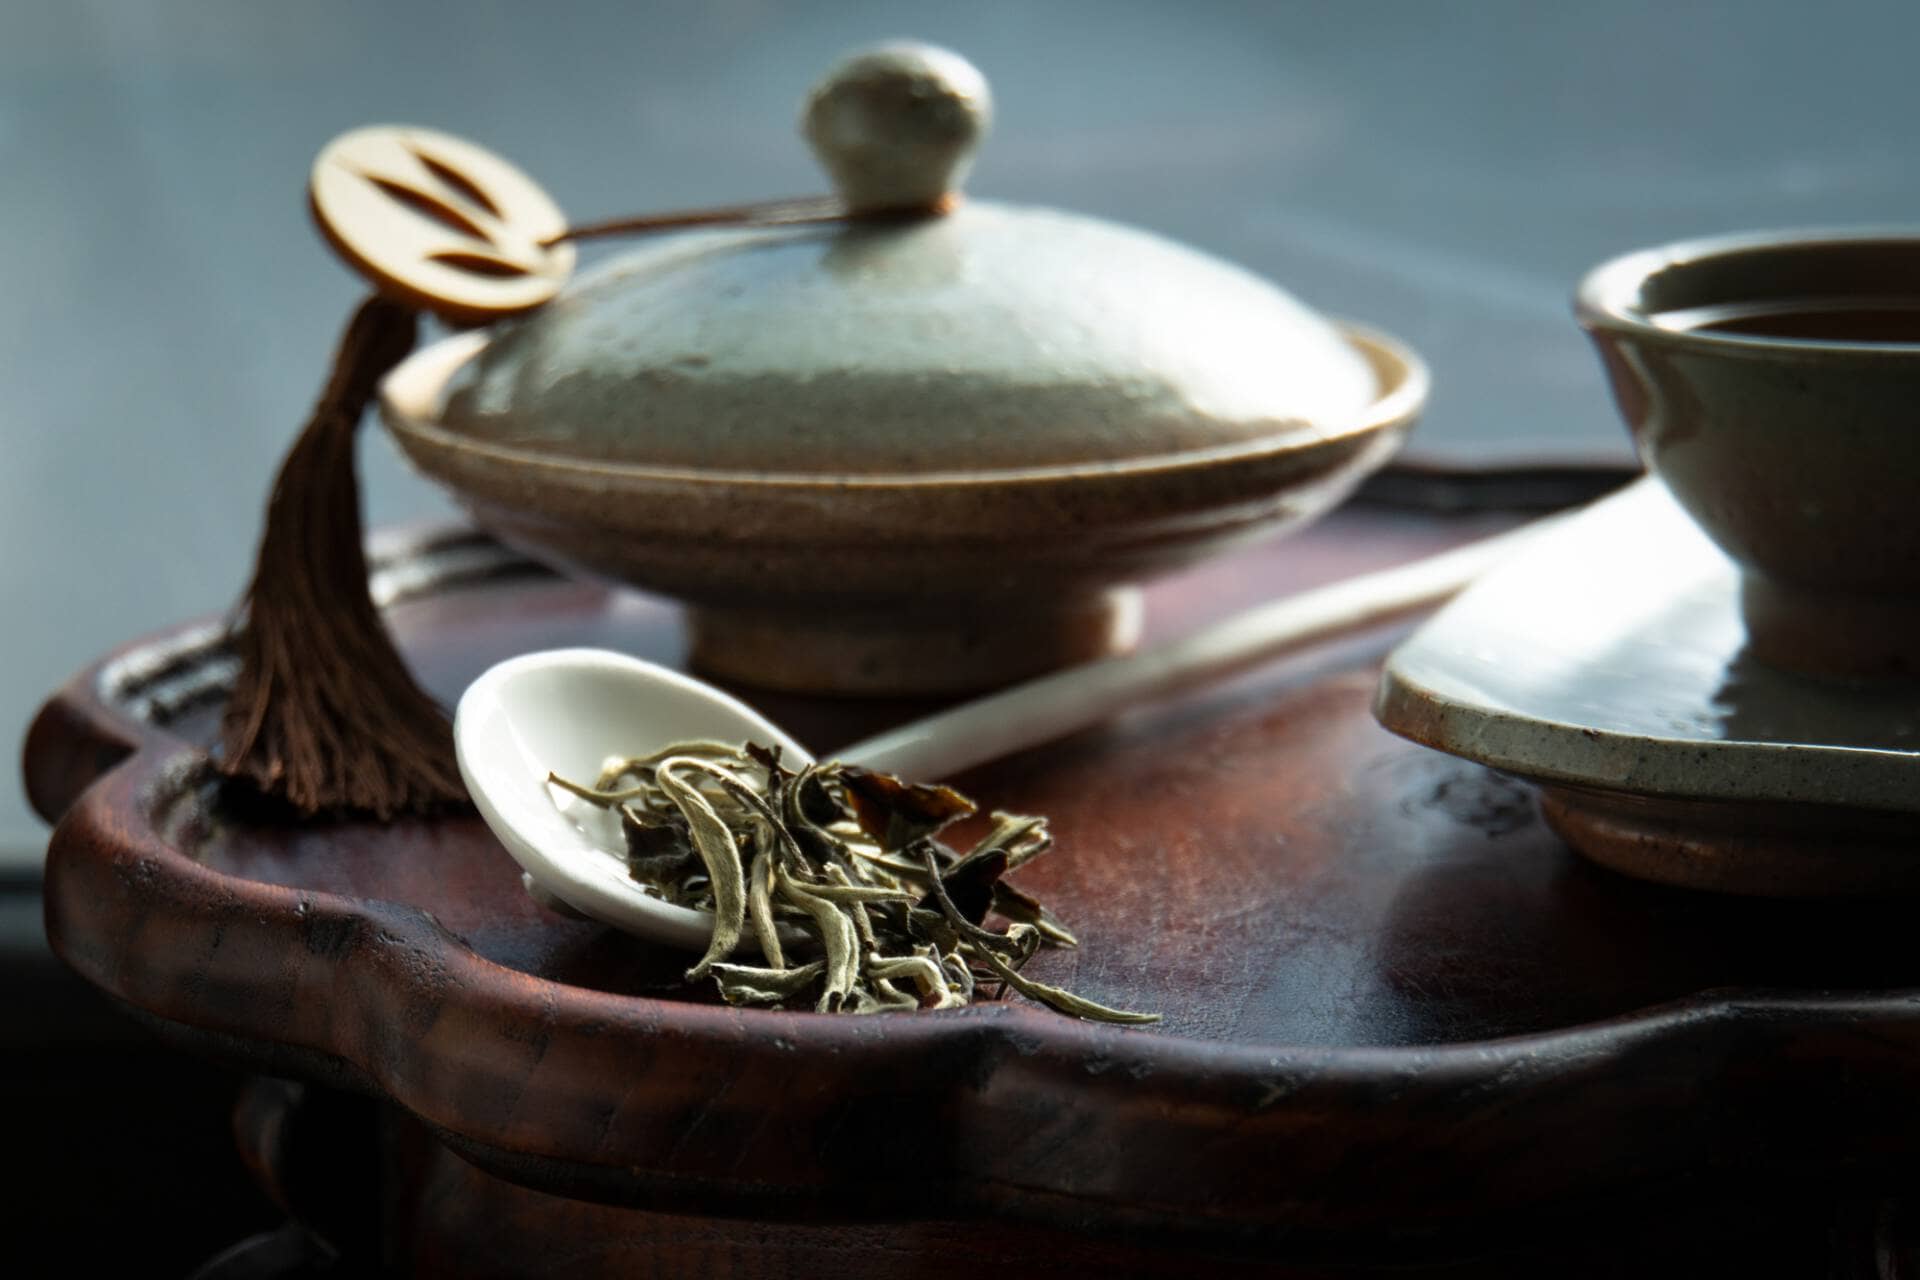 Tea_Passion_Sven-Christian Lange_Branding Photography_Tea Ceremony Arrangement With Antique Korean Pottery On Ancient Korean Wooden Stand_Tea Caddy_Bowl_White Moonlight_White Tea_alveus